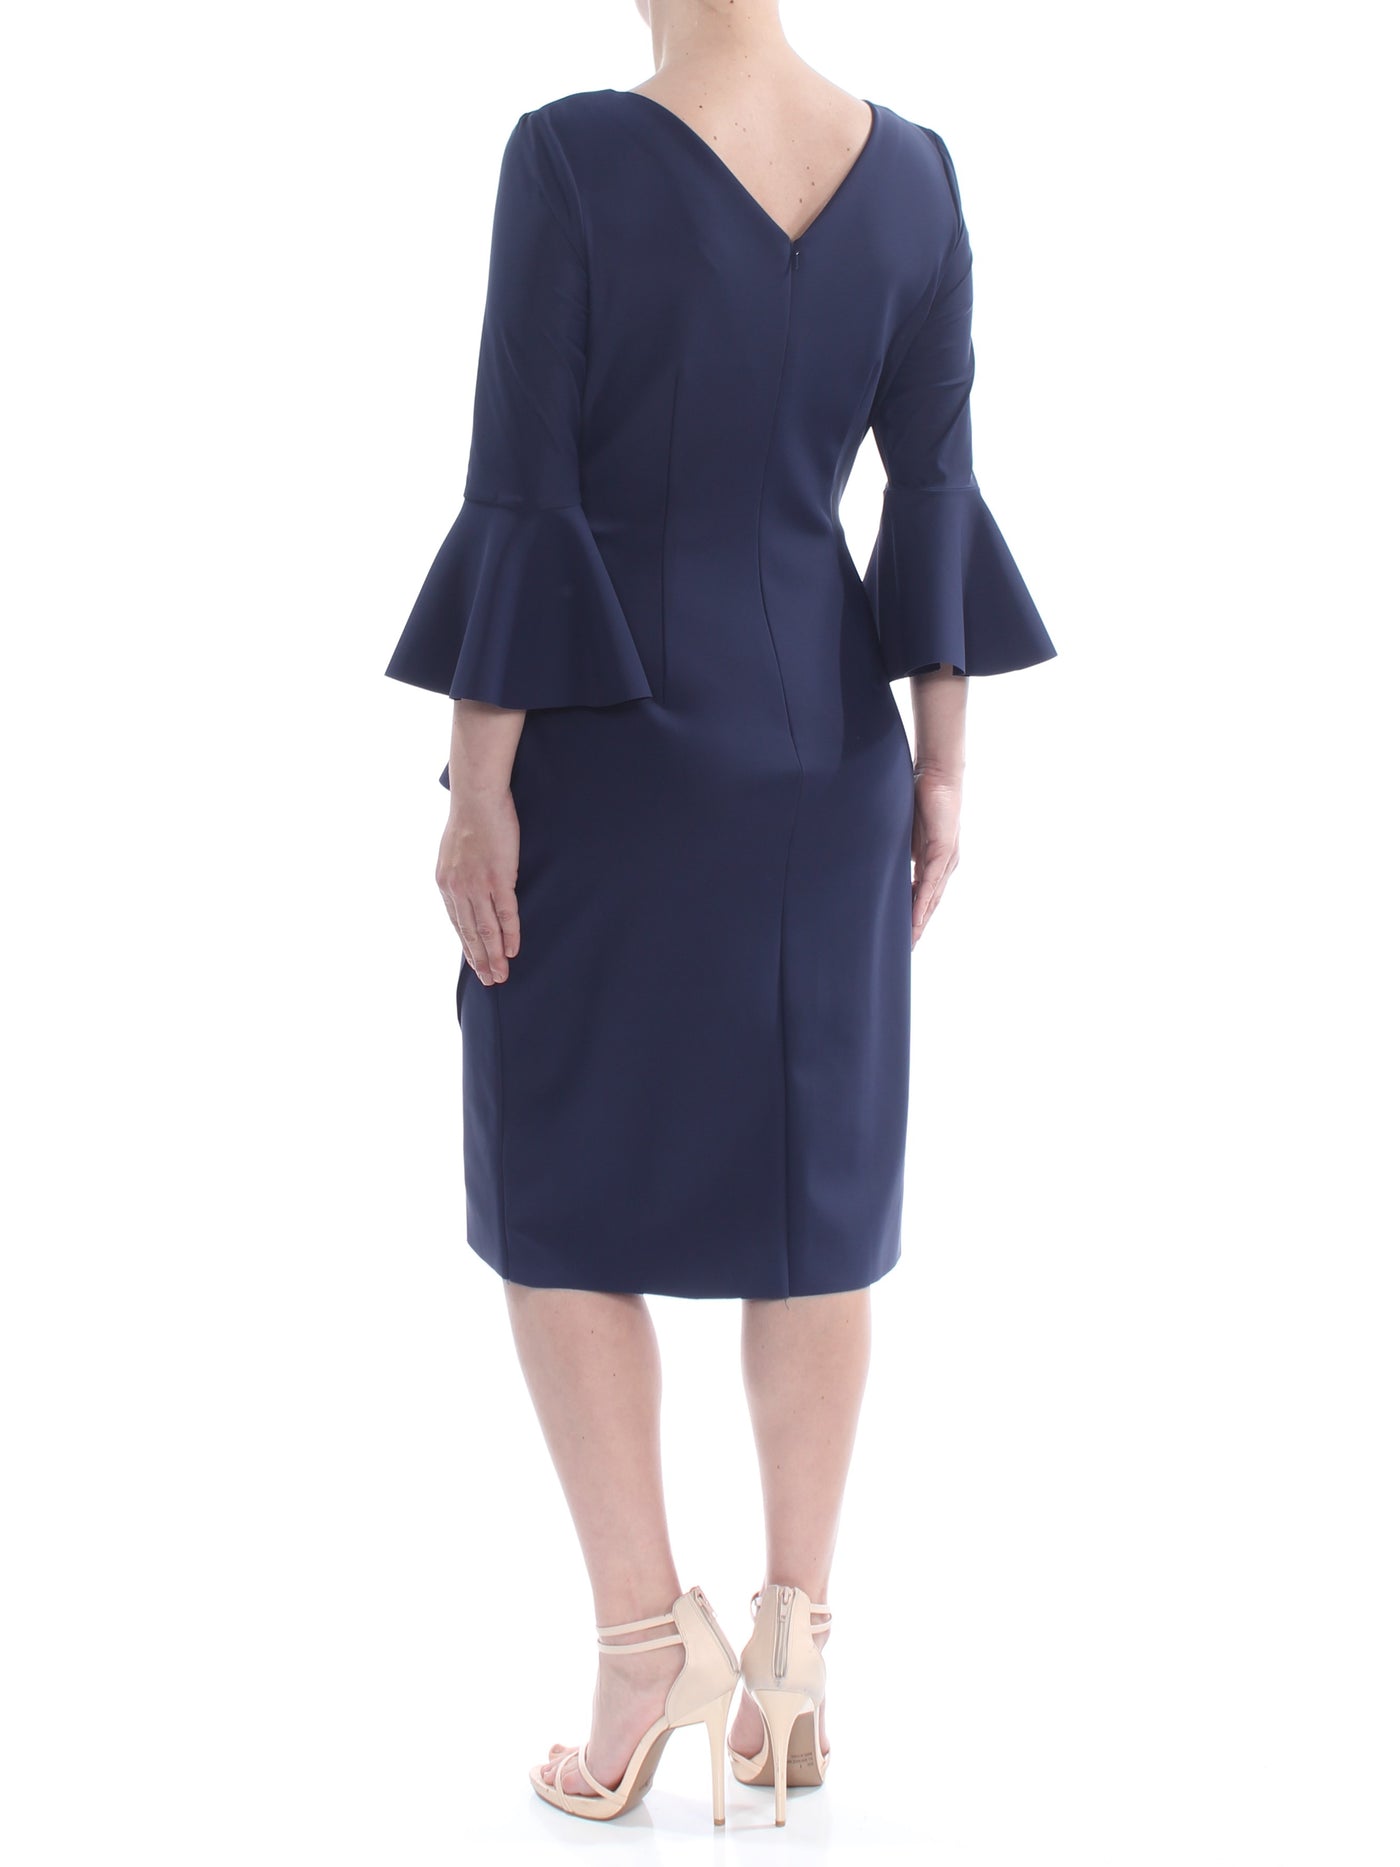 ALEX EVENINGS Womens Navy Bell Sleeve Jewel Neck Knee Length Wear To Work Sheath Dress